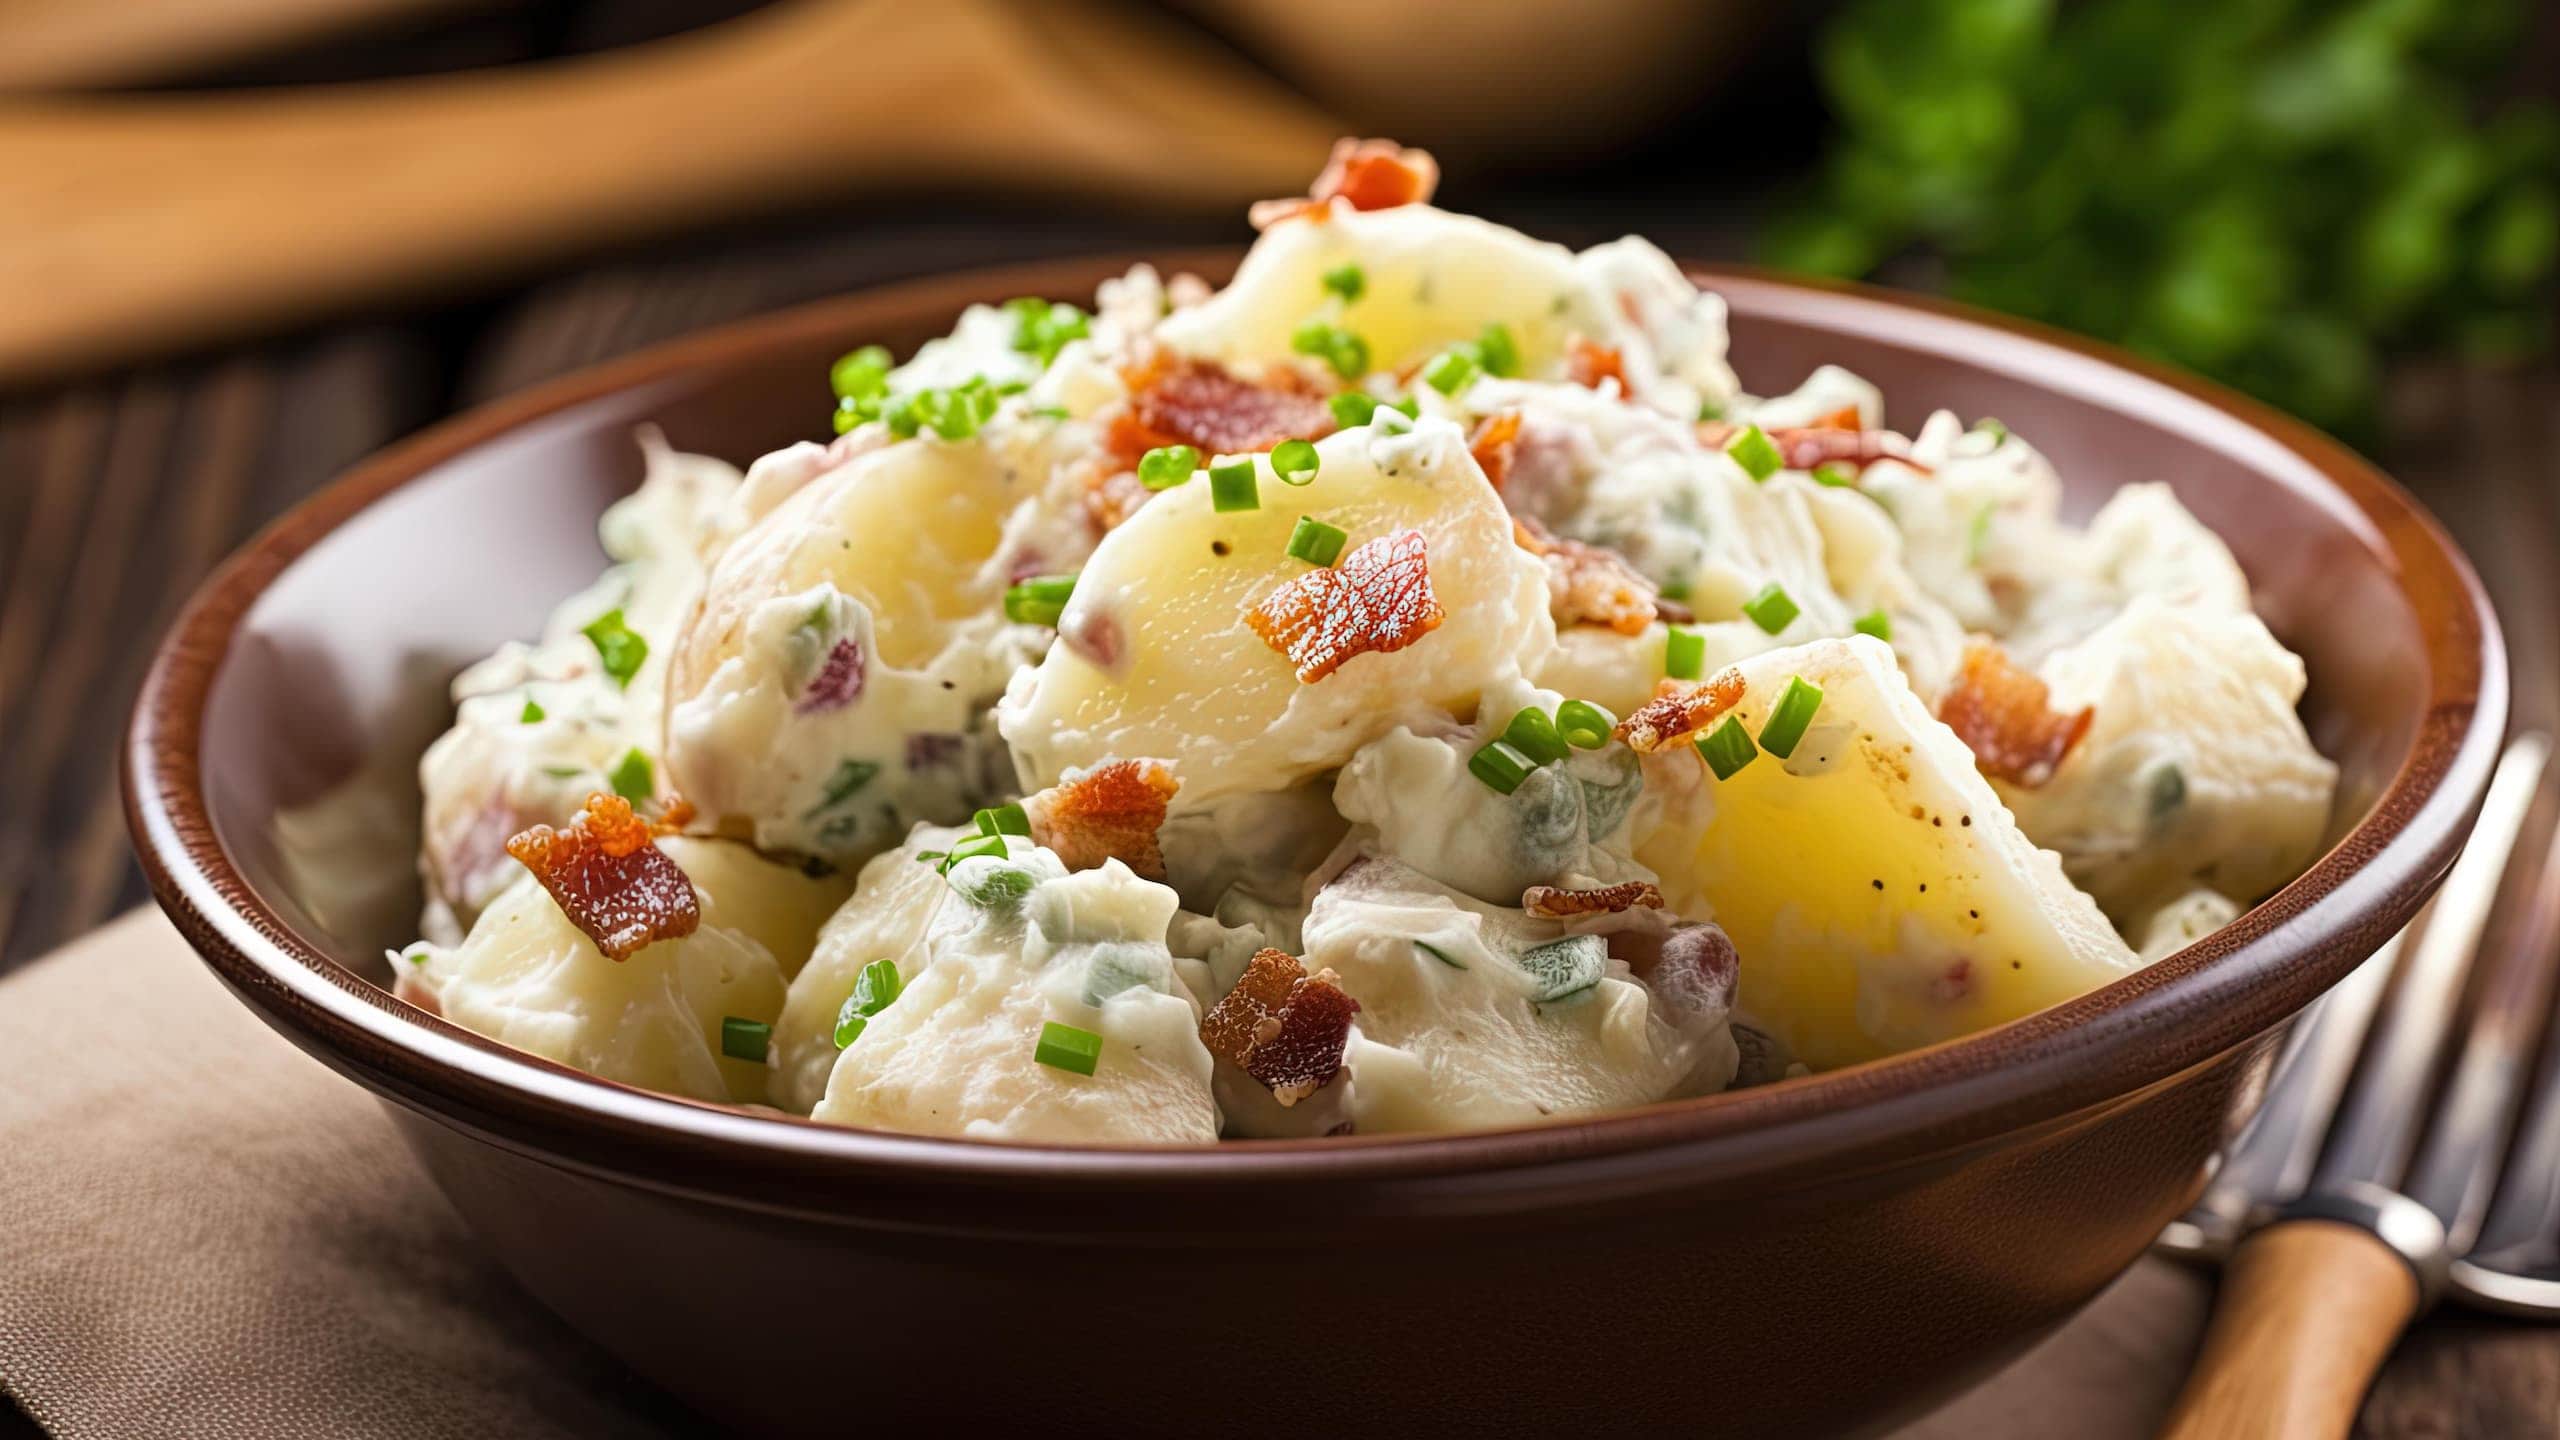 Our version of Juan Pollo's potato salad